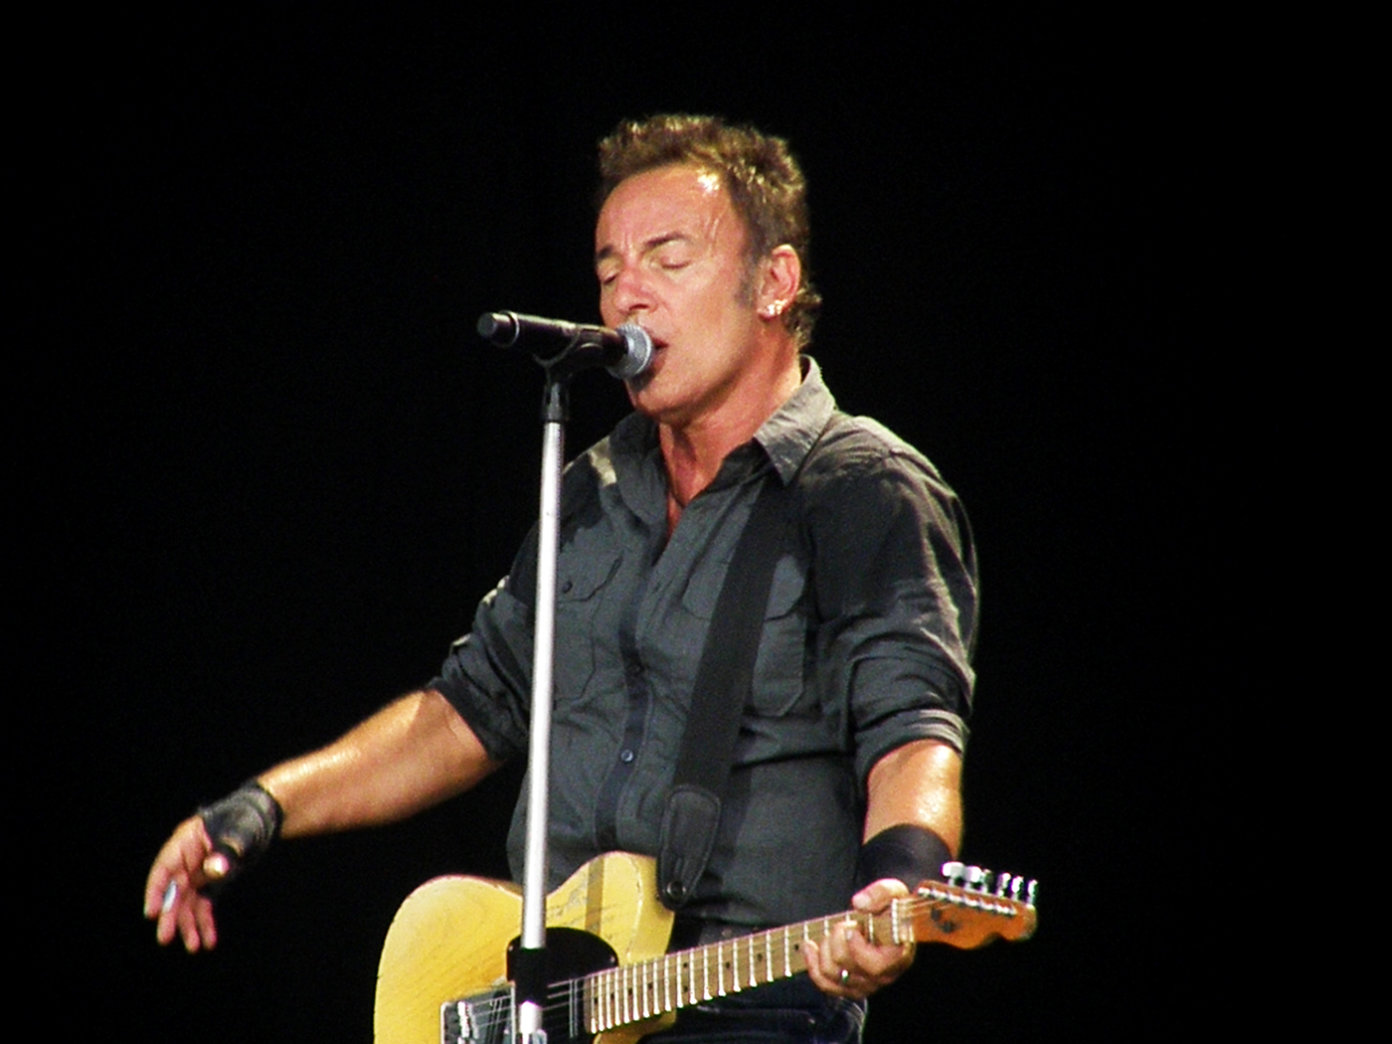 Watch Bruce Springsteen's entire 2009 Hyde Park concert UNCUT